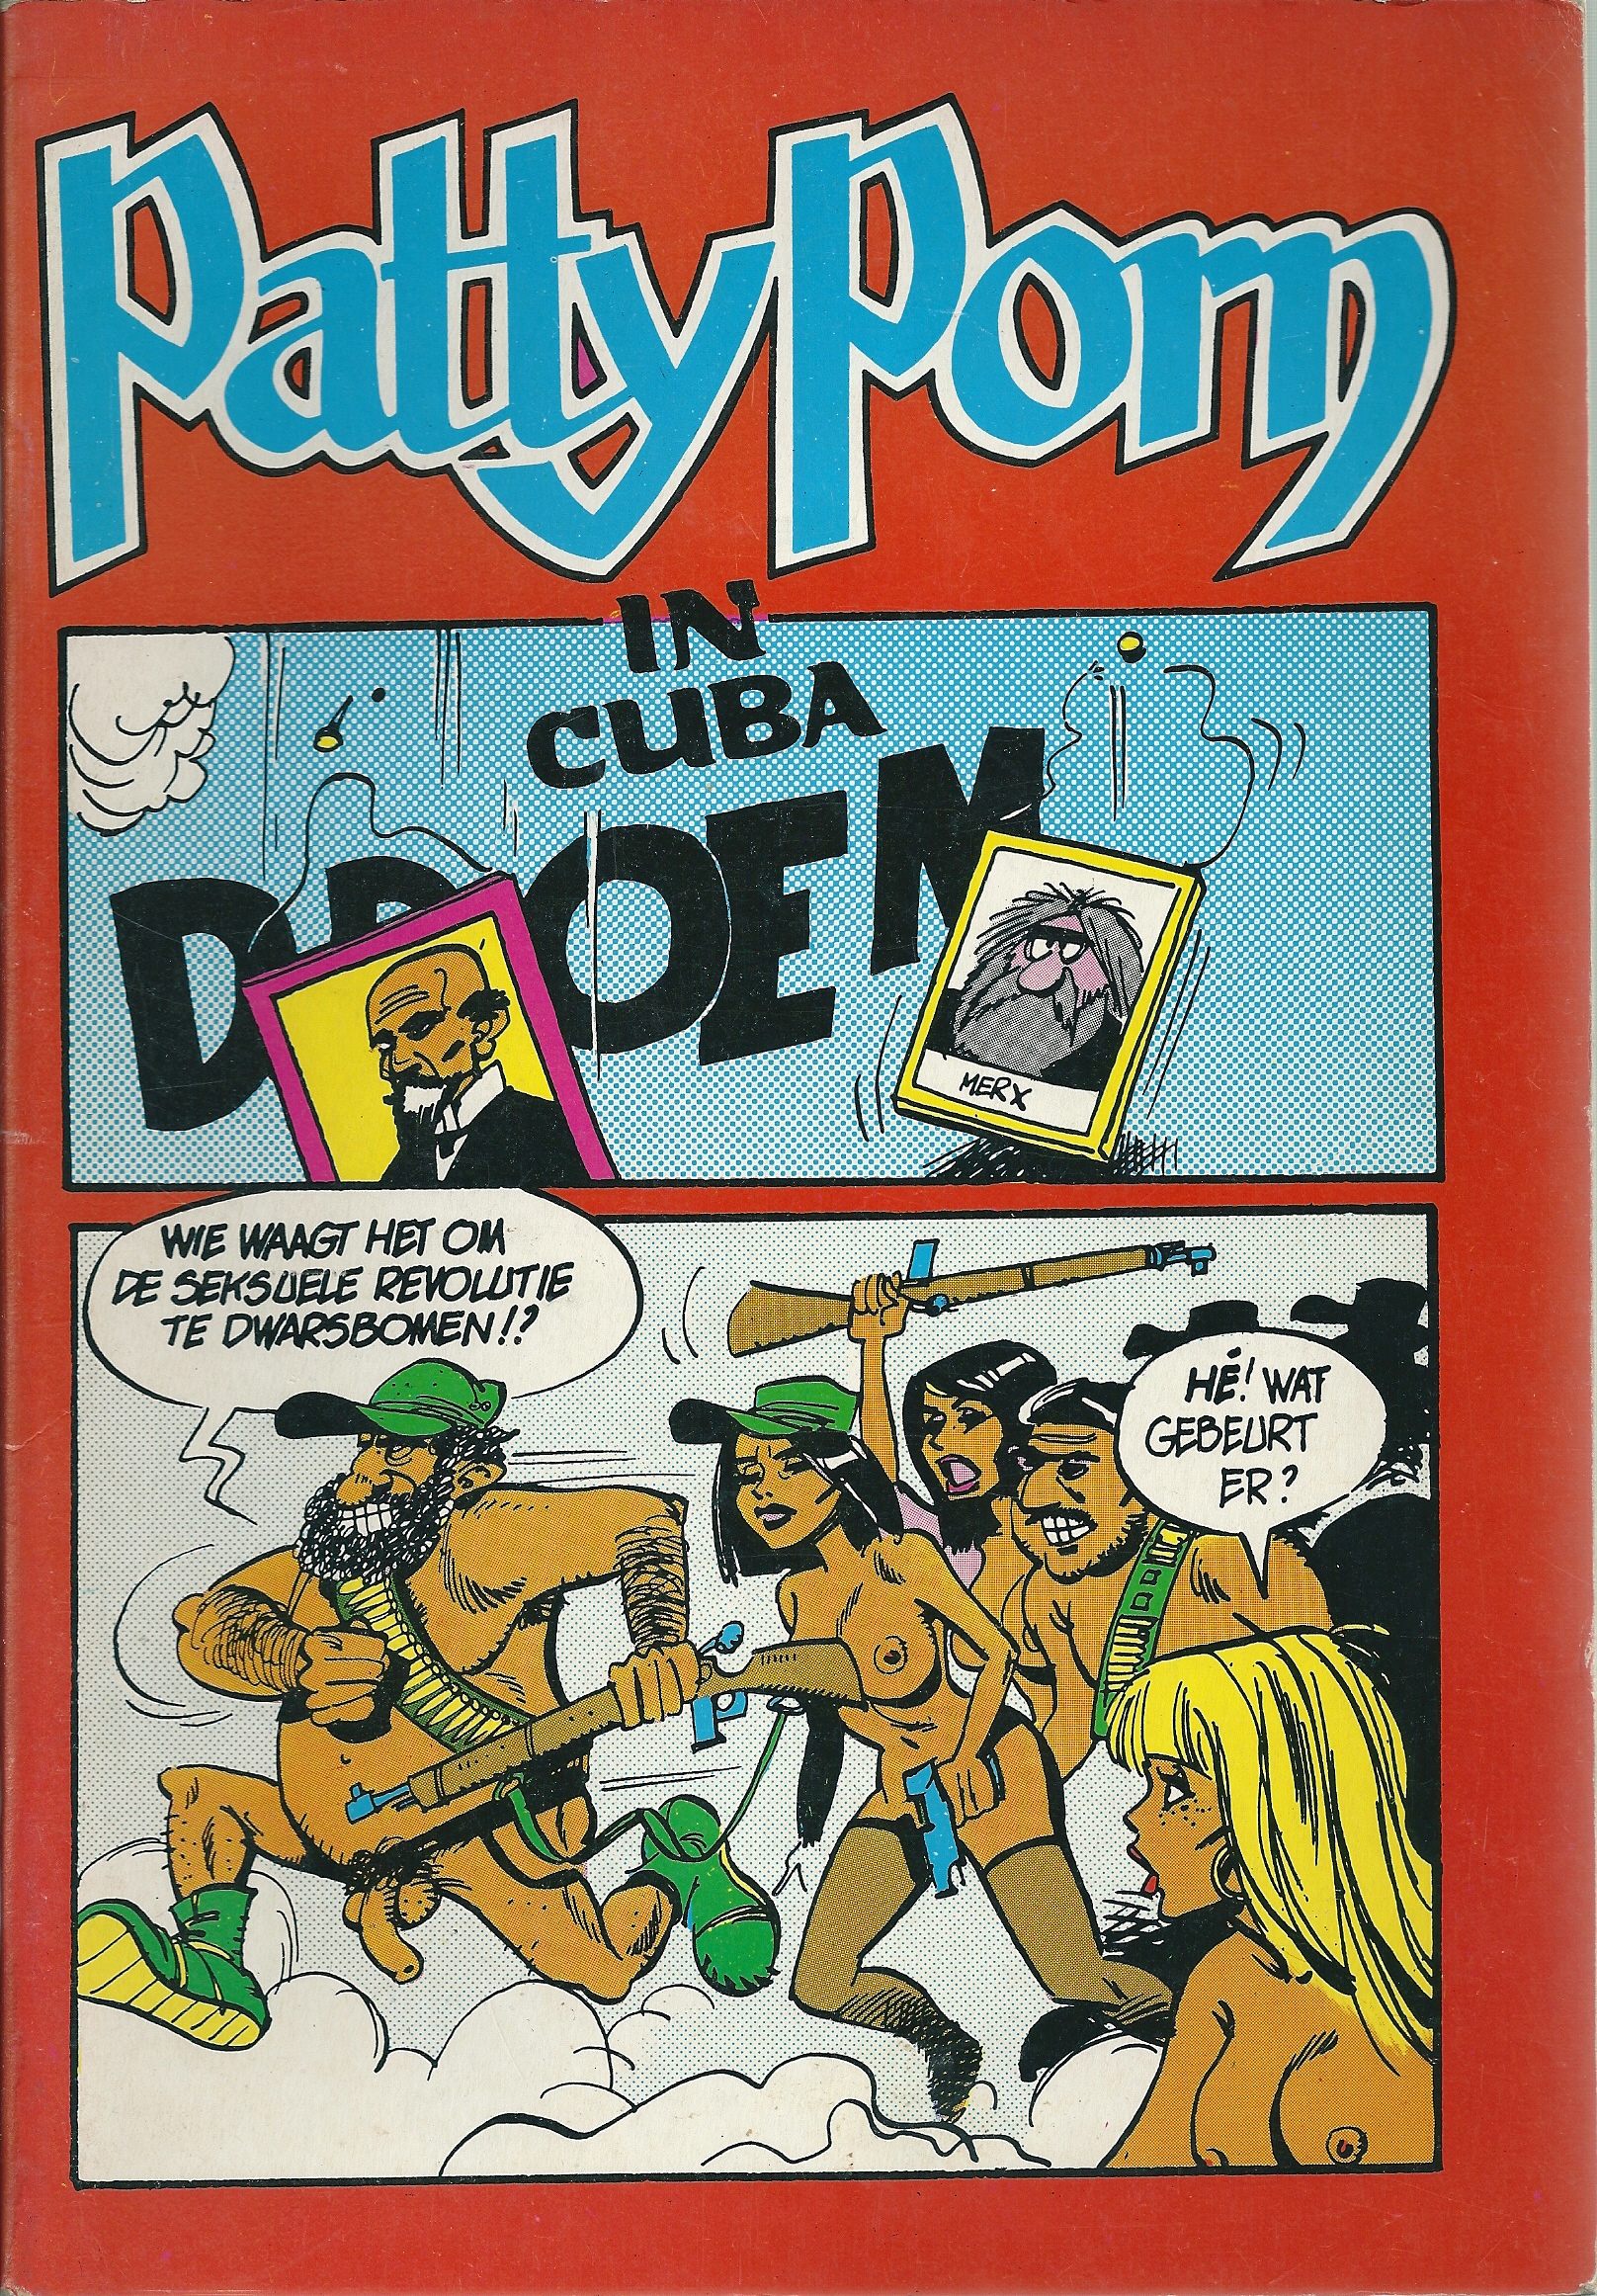 Patty Porn in Cuba - Strippgaaff